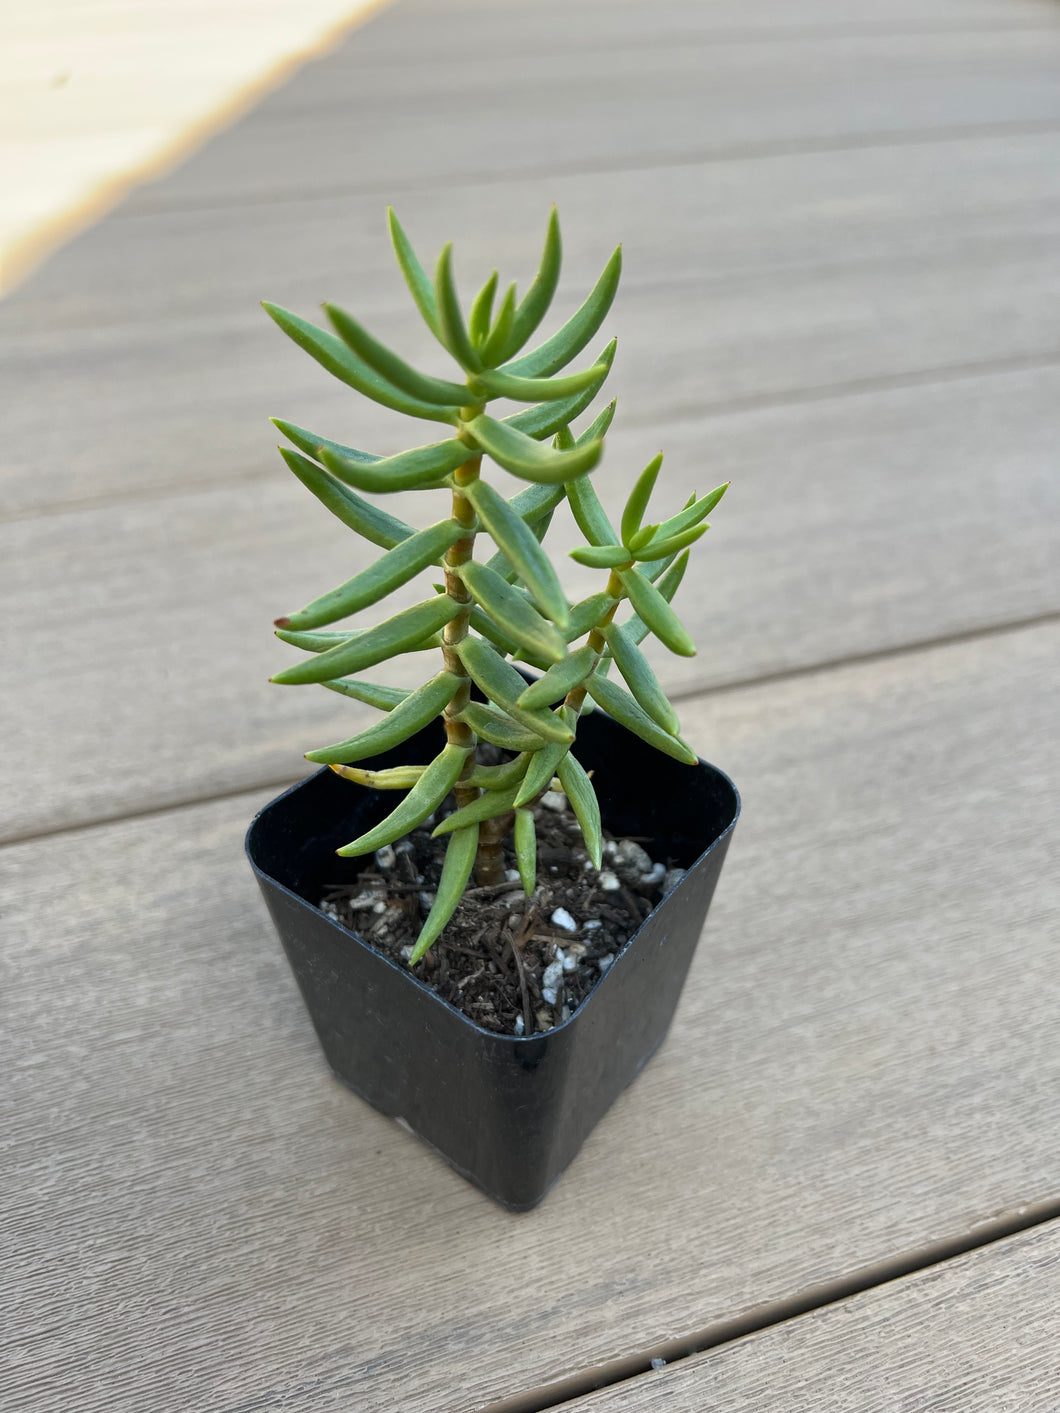 Mini Pine Tree Succulent - Crassula Tetragona - 4 inch